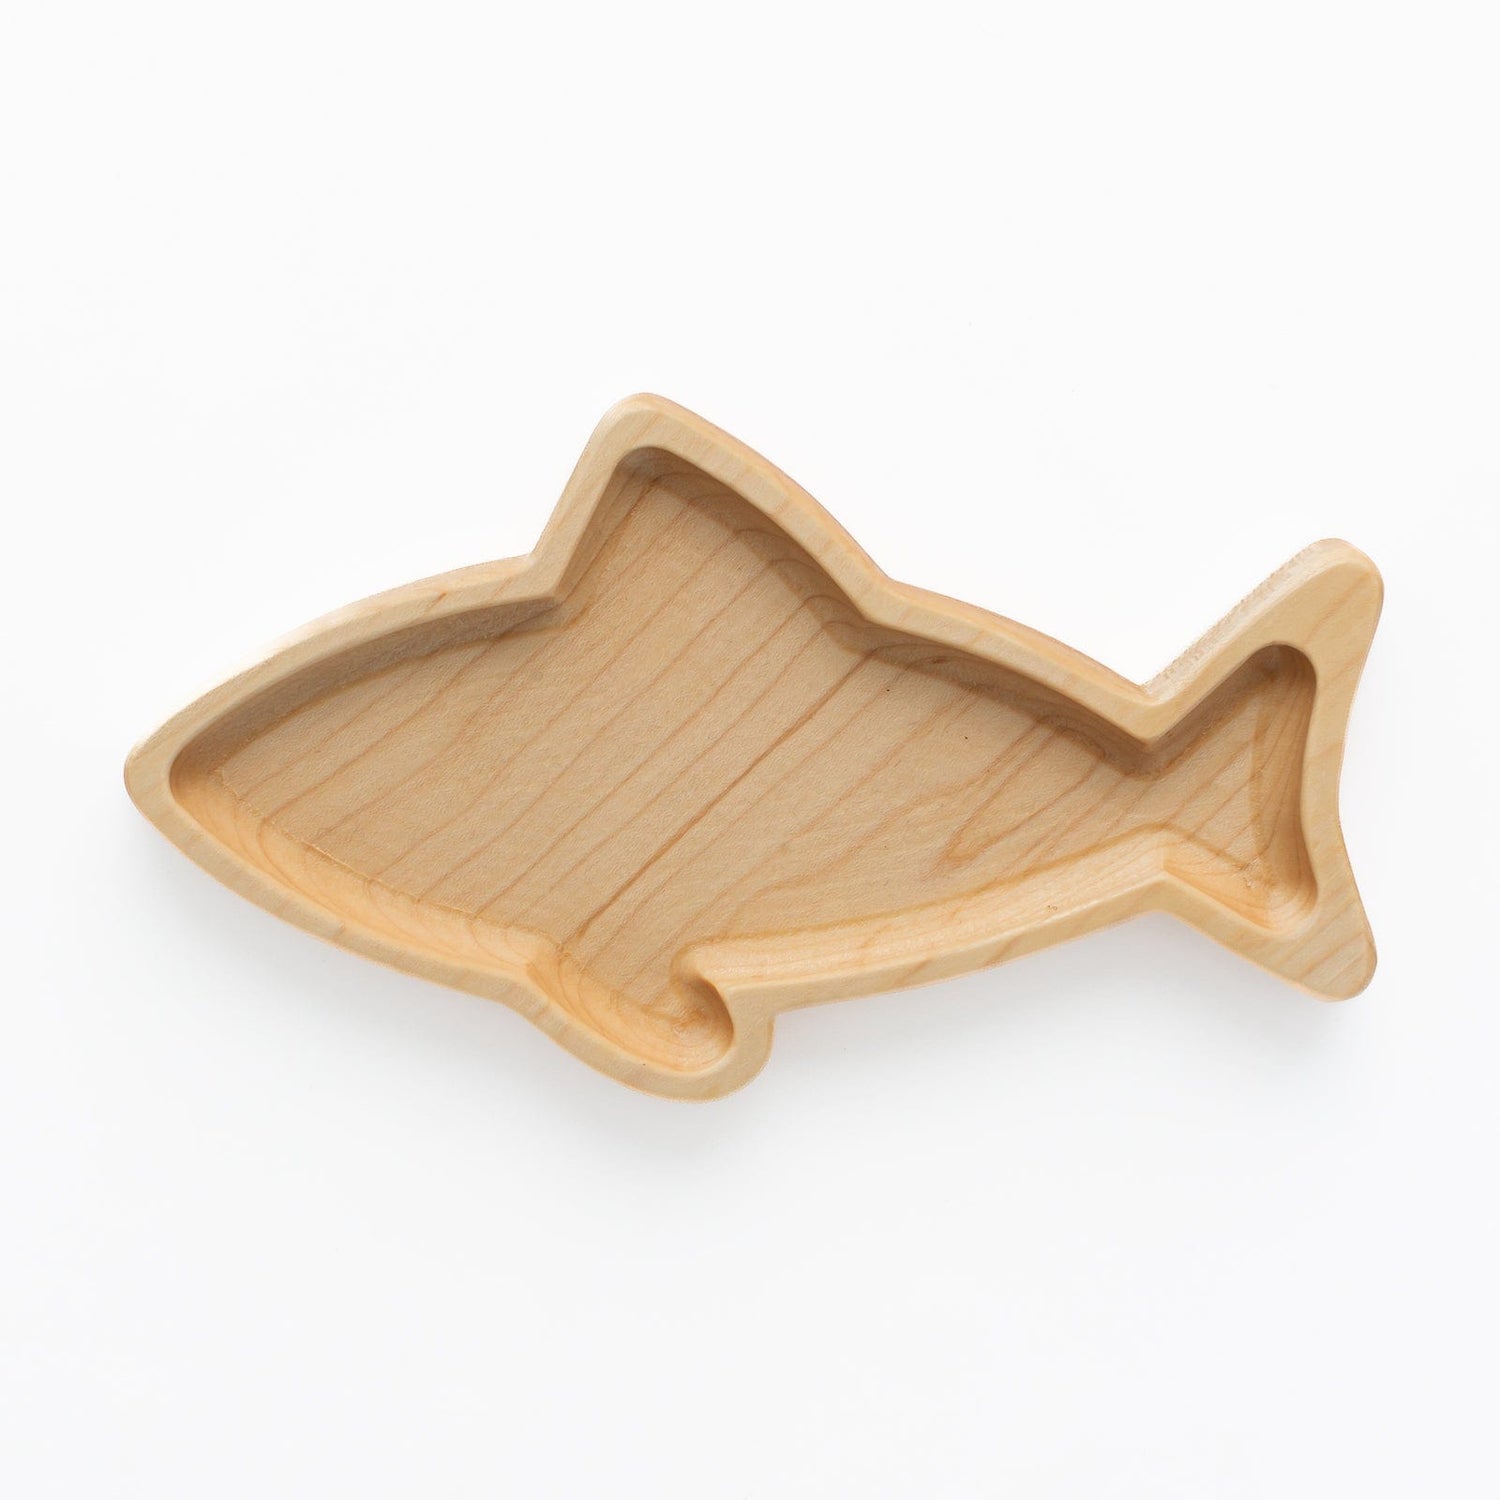 Aw & Co. Sensory Play Wooden Shark Plate / Sensory Tray (Made in Canada)